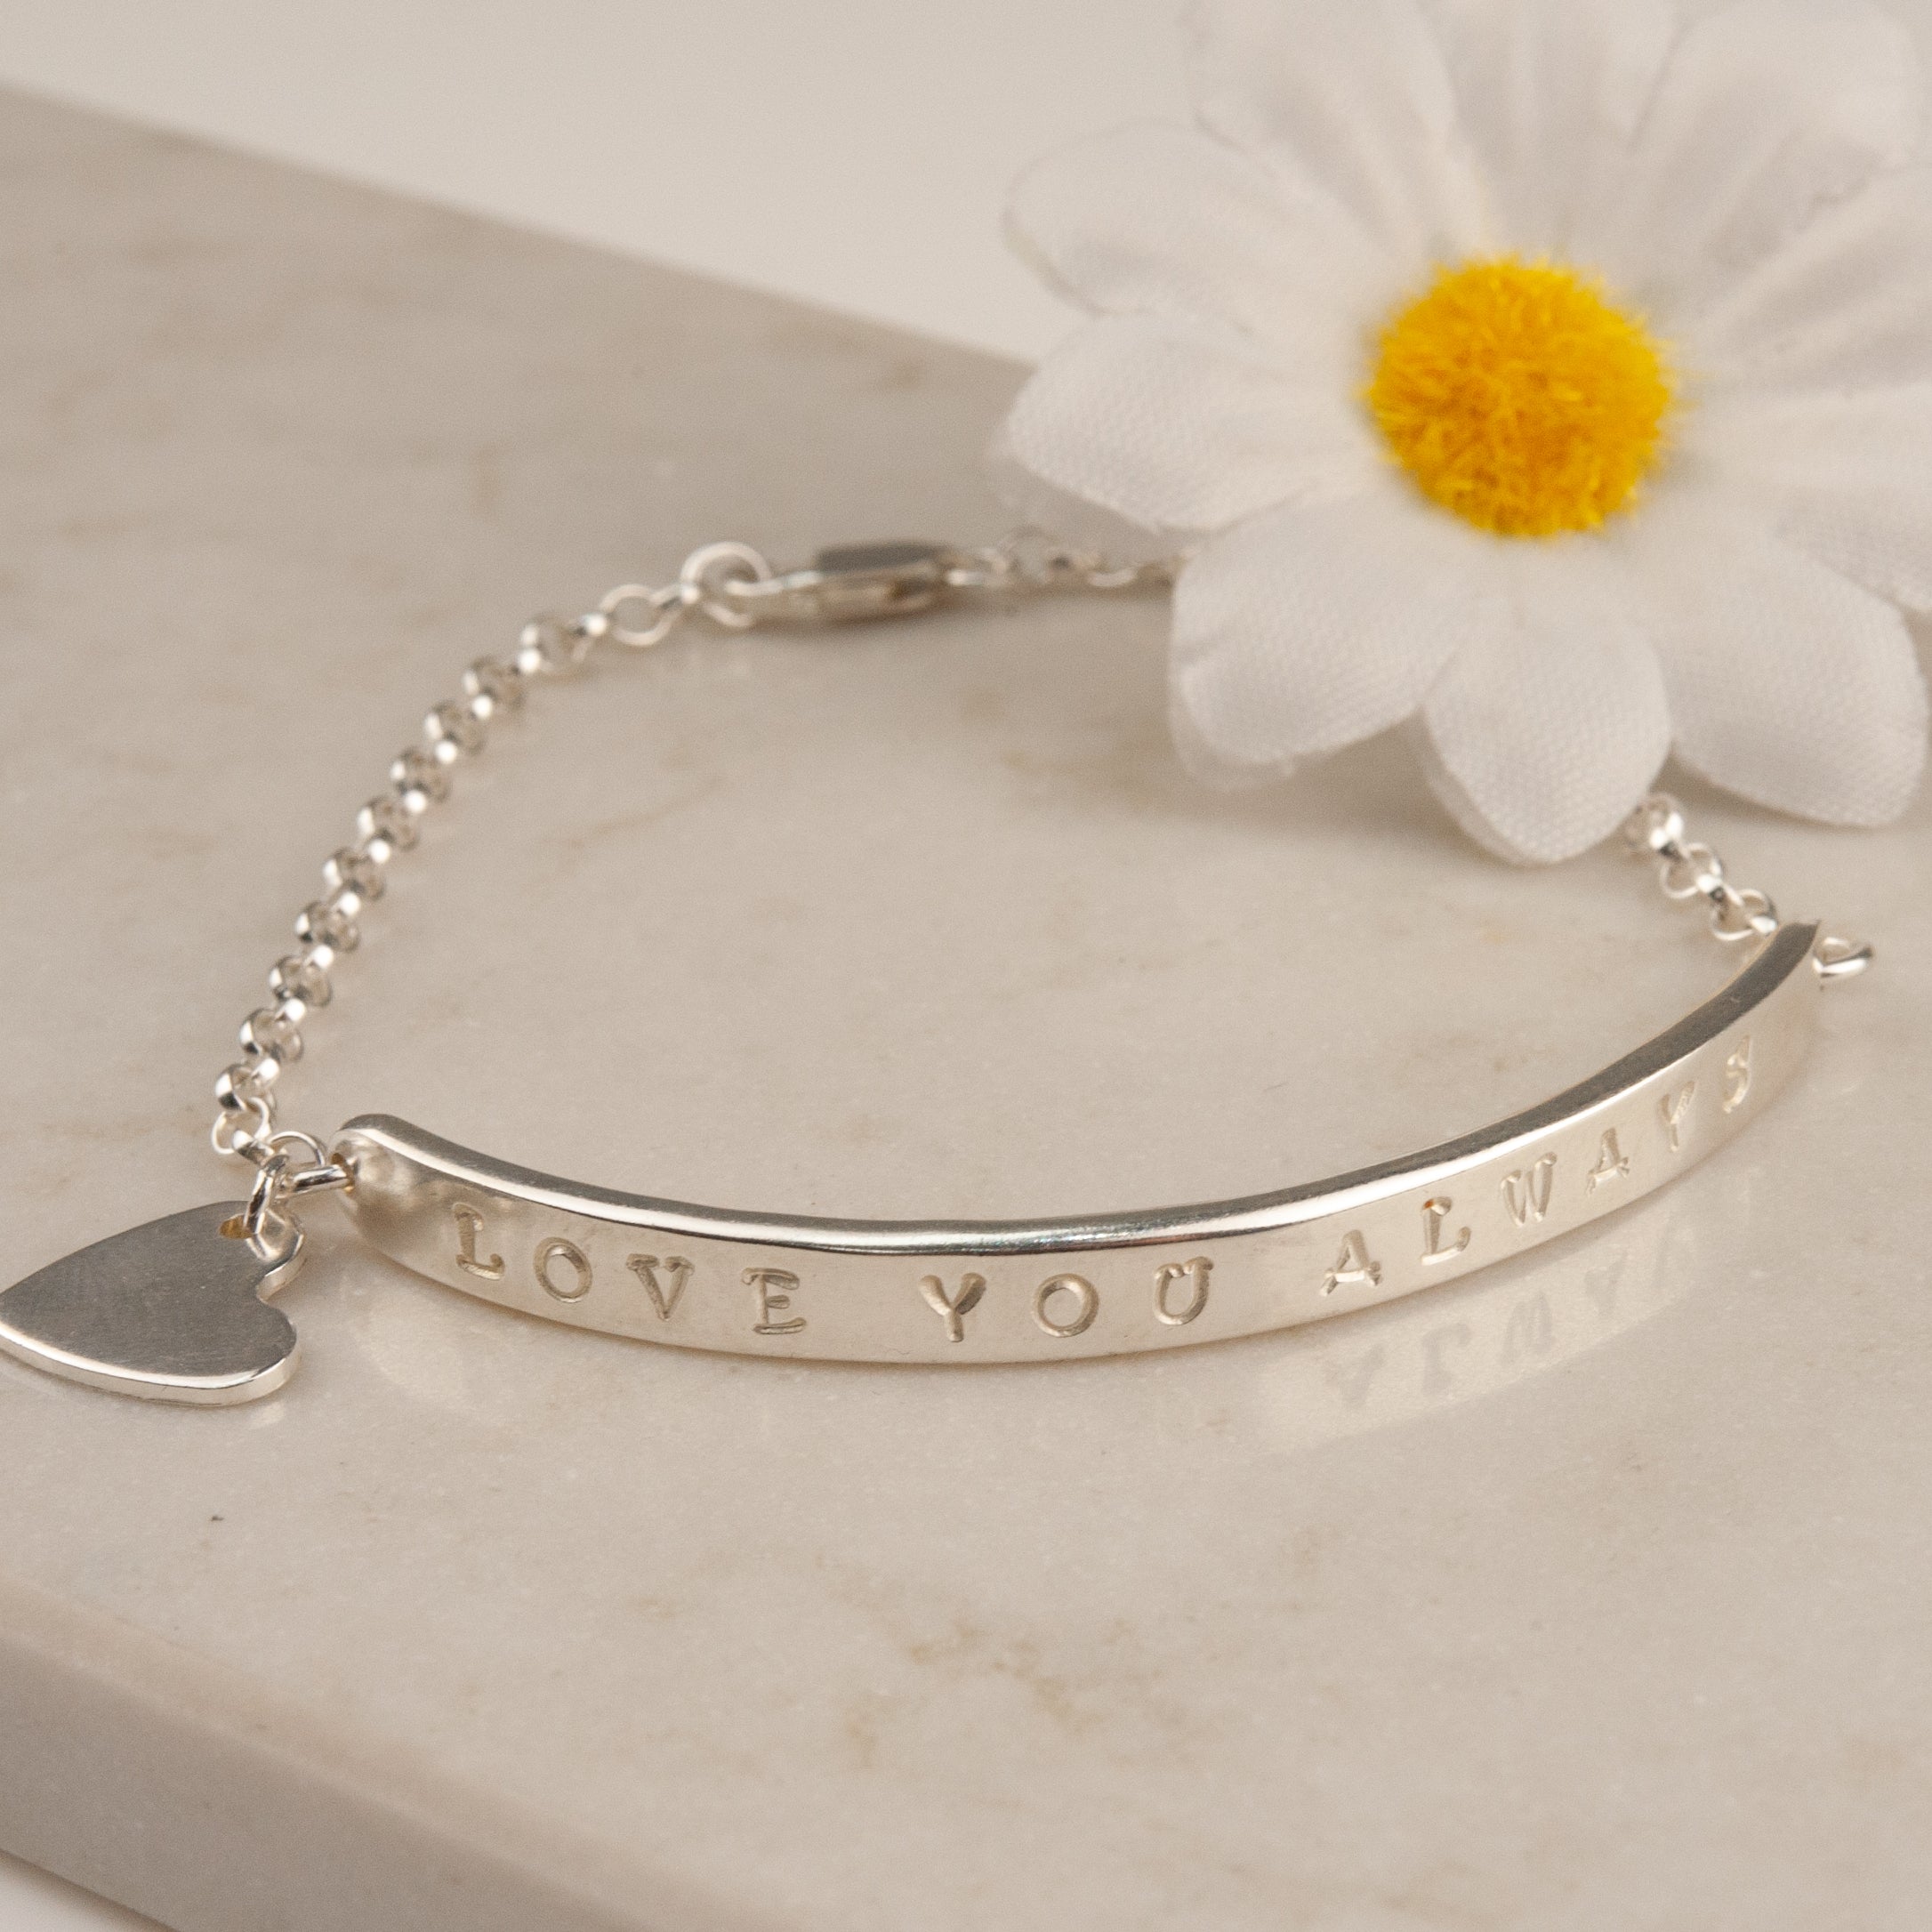 Belle & Bee sterling silver bar bracelet